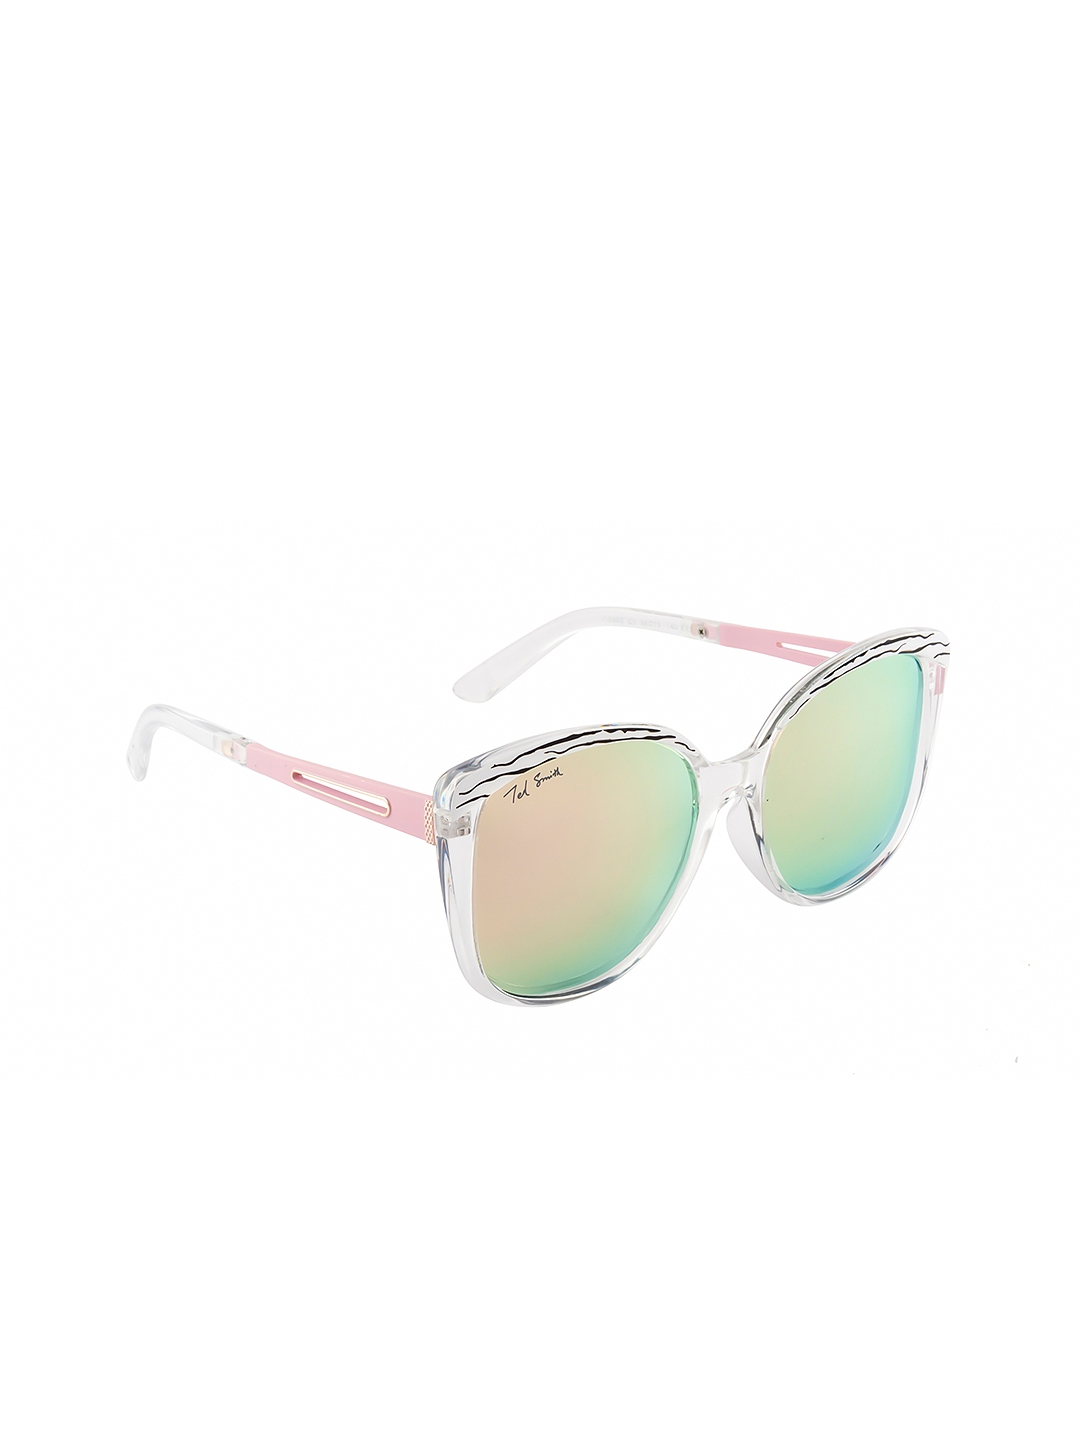 white cateye sunglasses